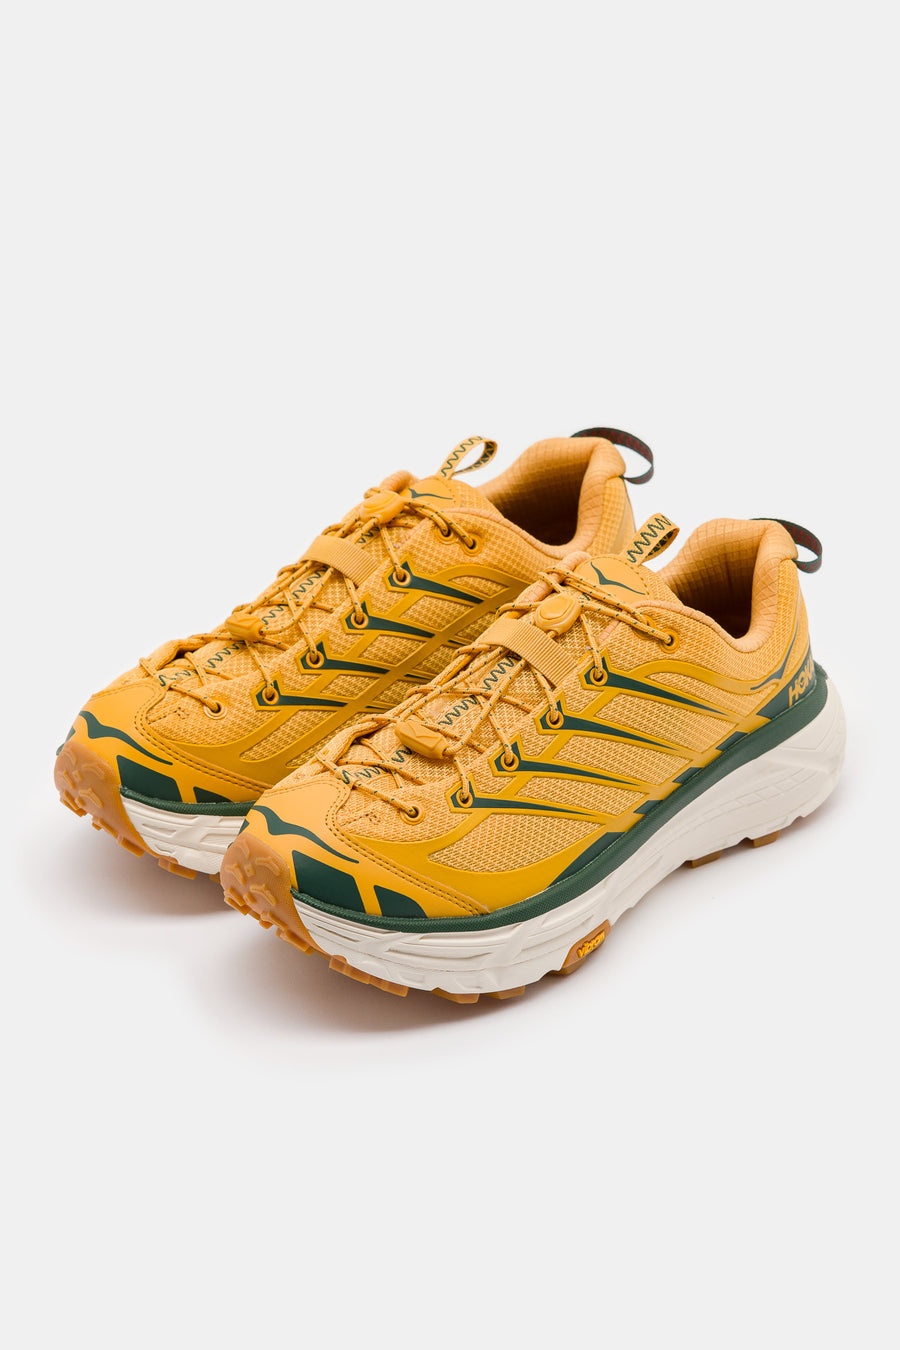 Mafate Three2 Sneaker in Golden Yellow/Eggnog - 2